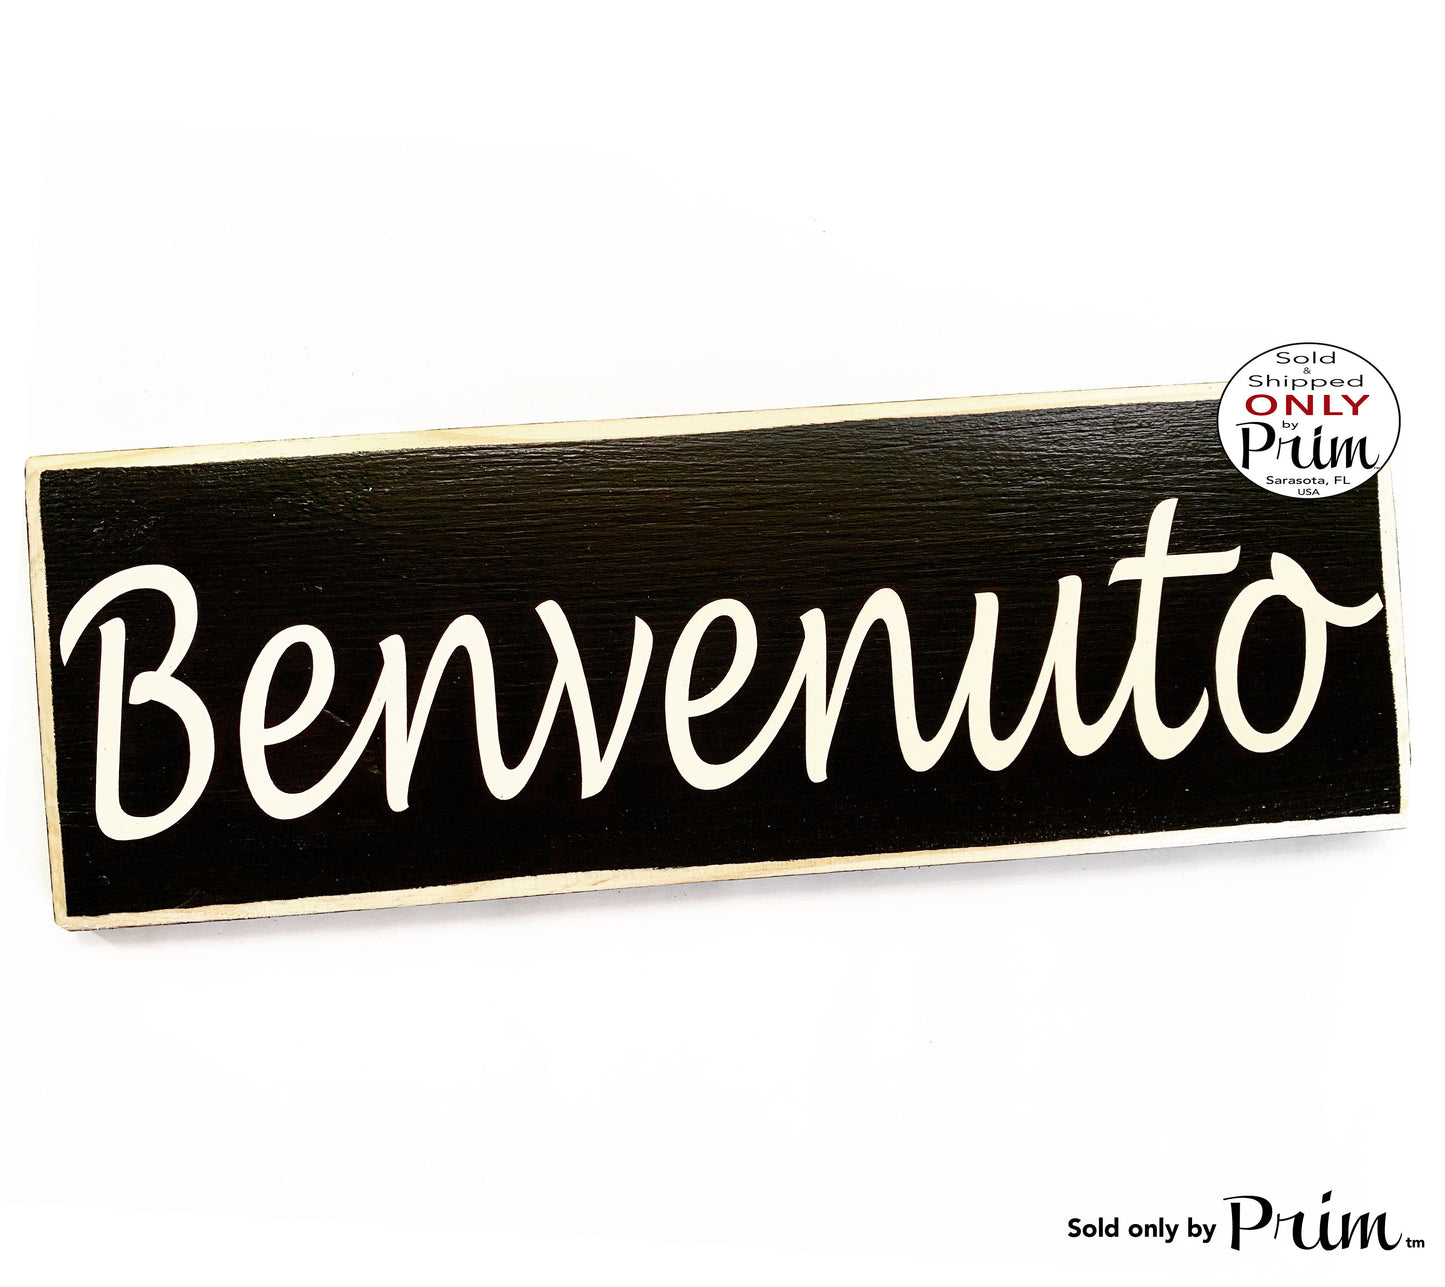 14x6 Benvenuto Custom Wood Sign Italian Italy Chao Welcome Greetings Wall Above Door Plaque